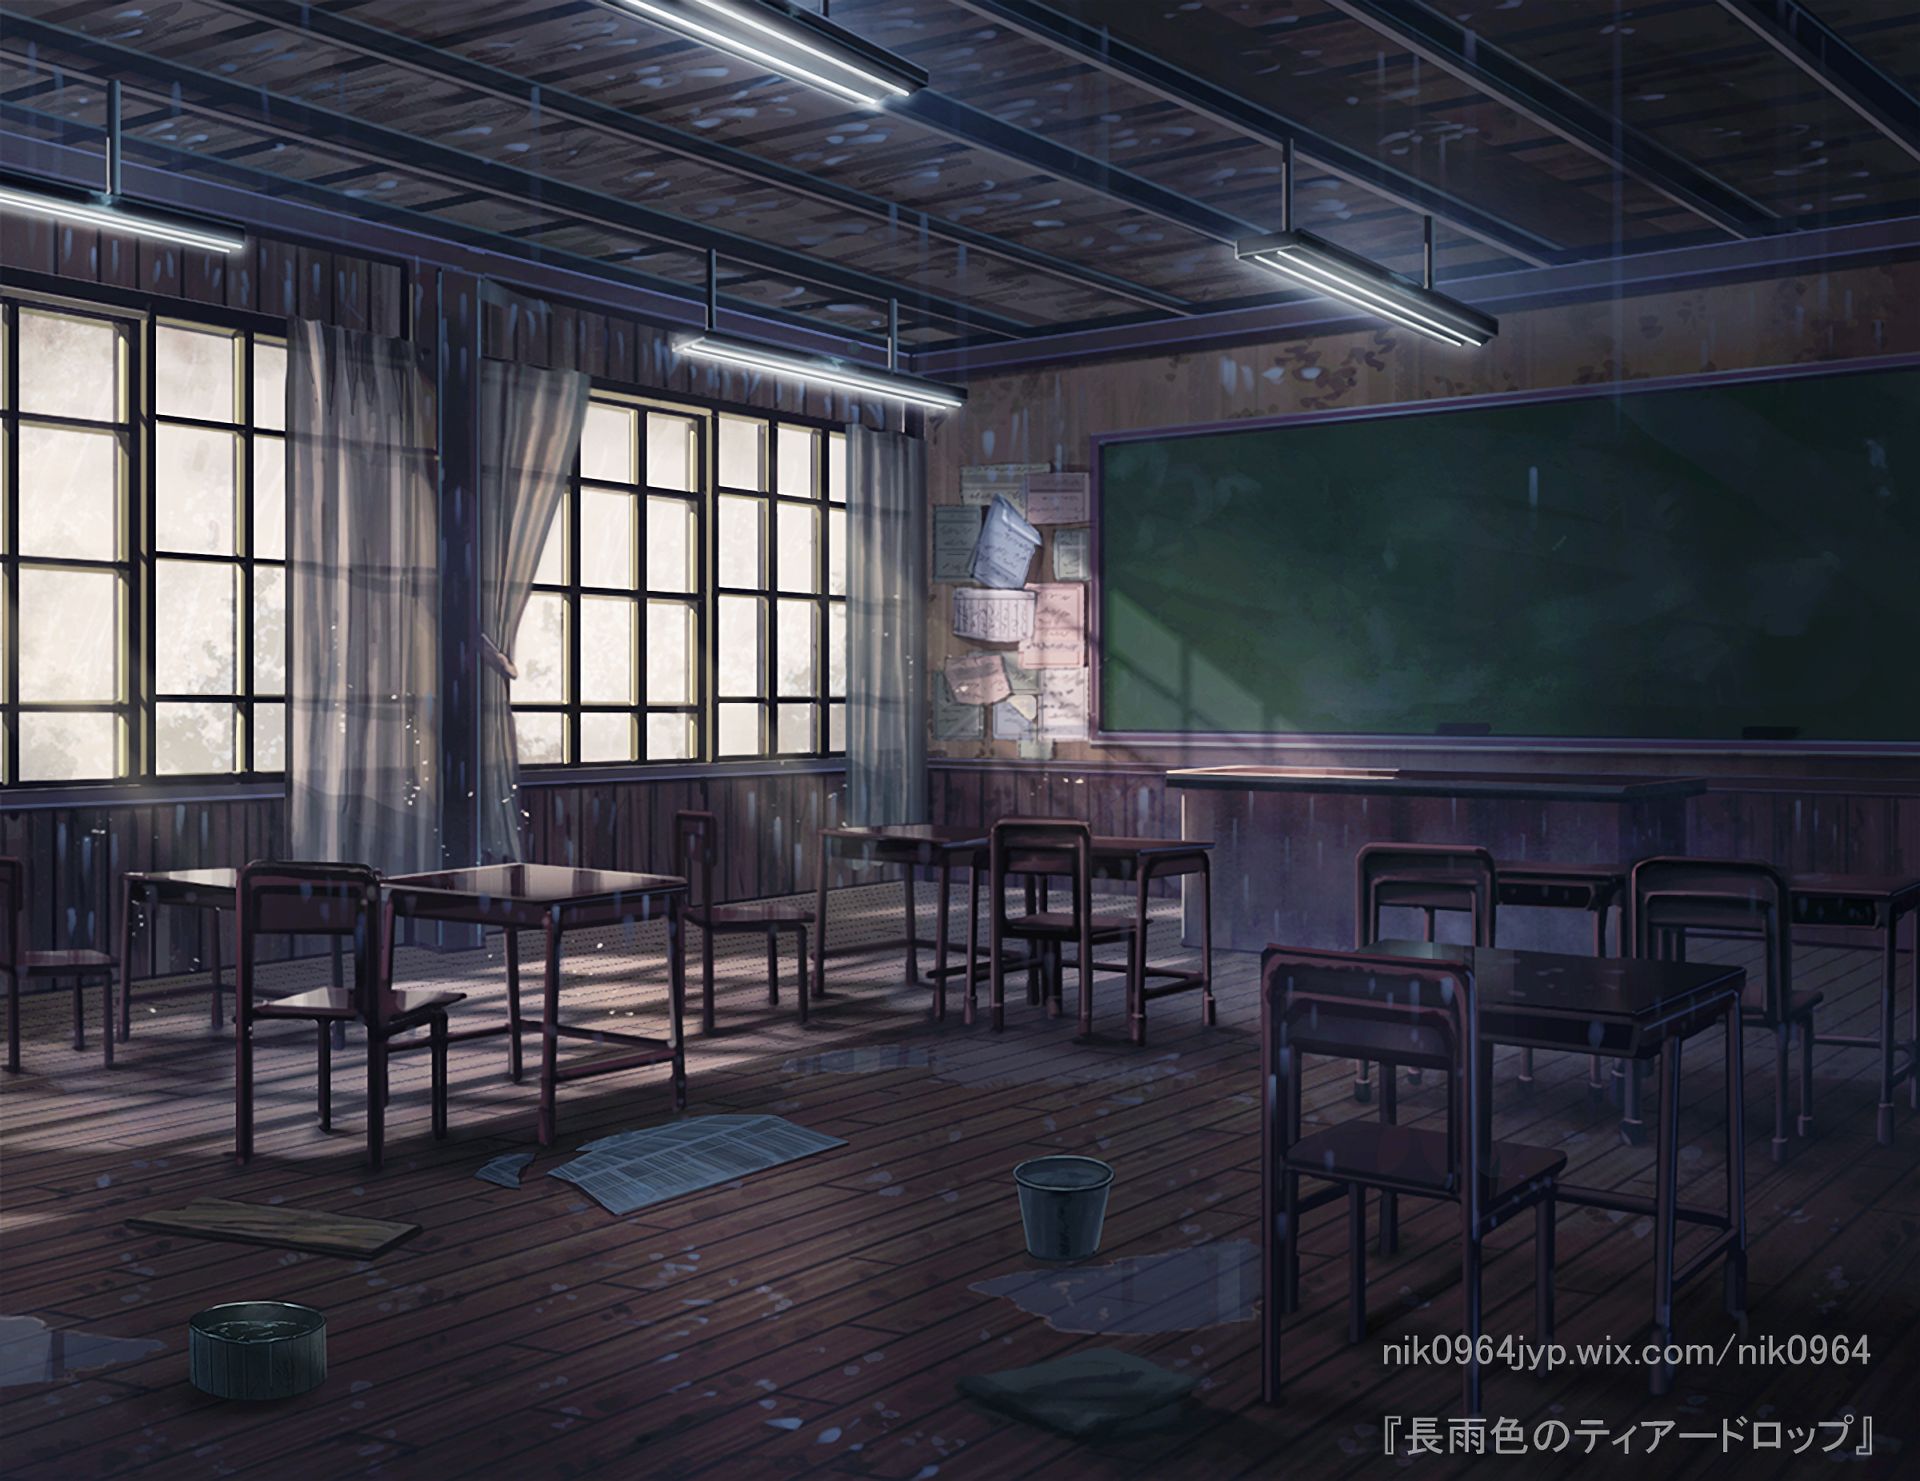 school, anime, classroom